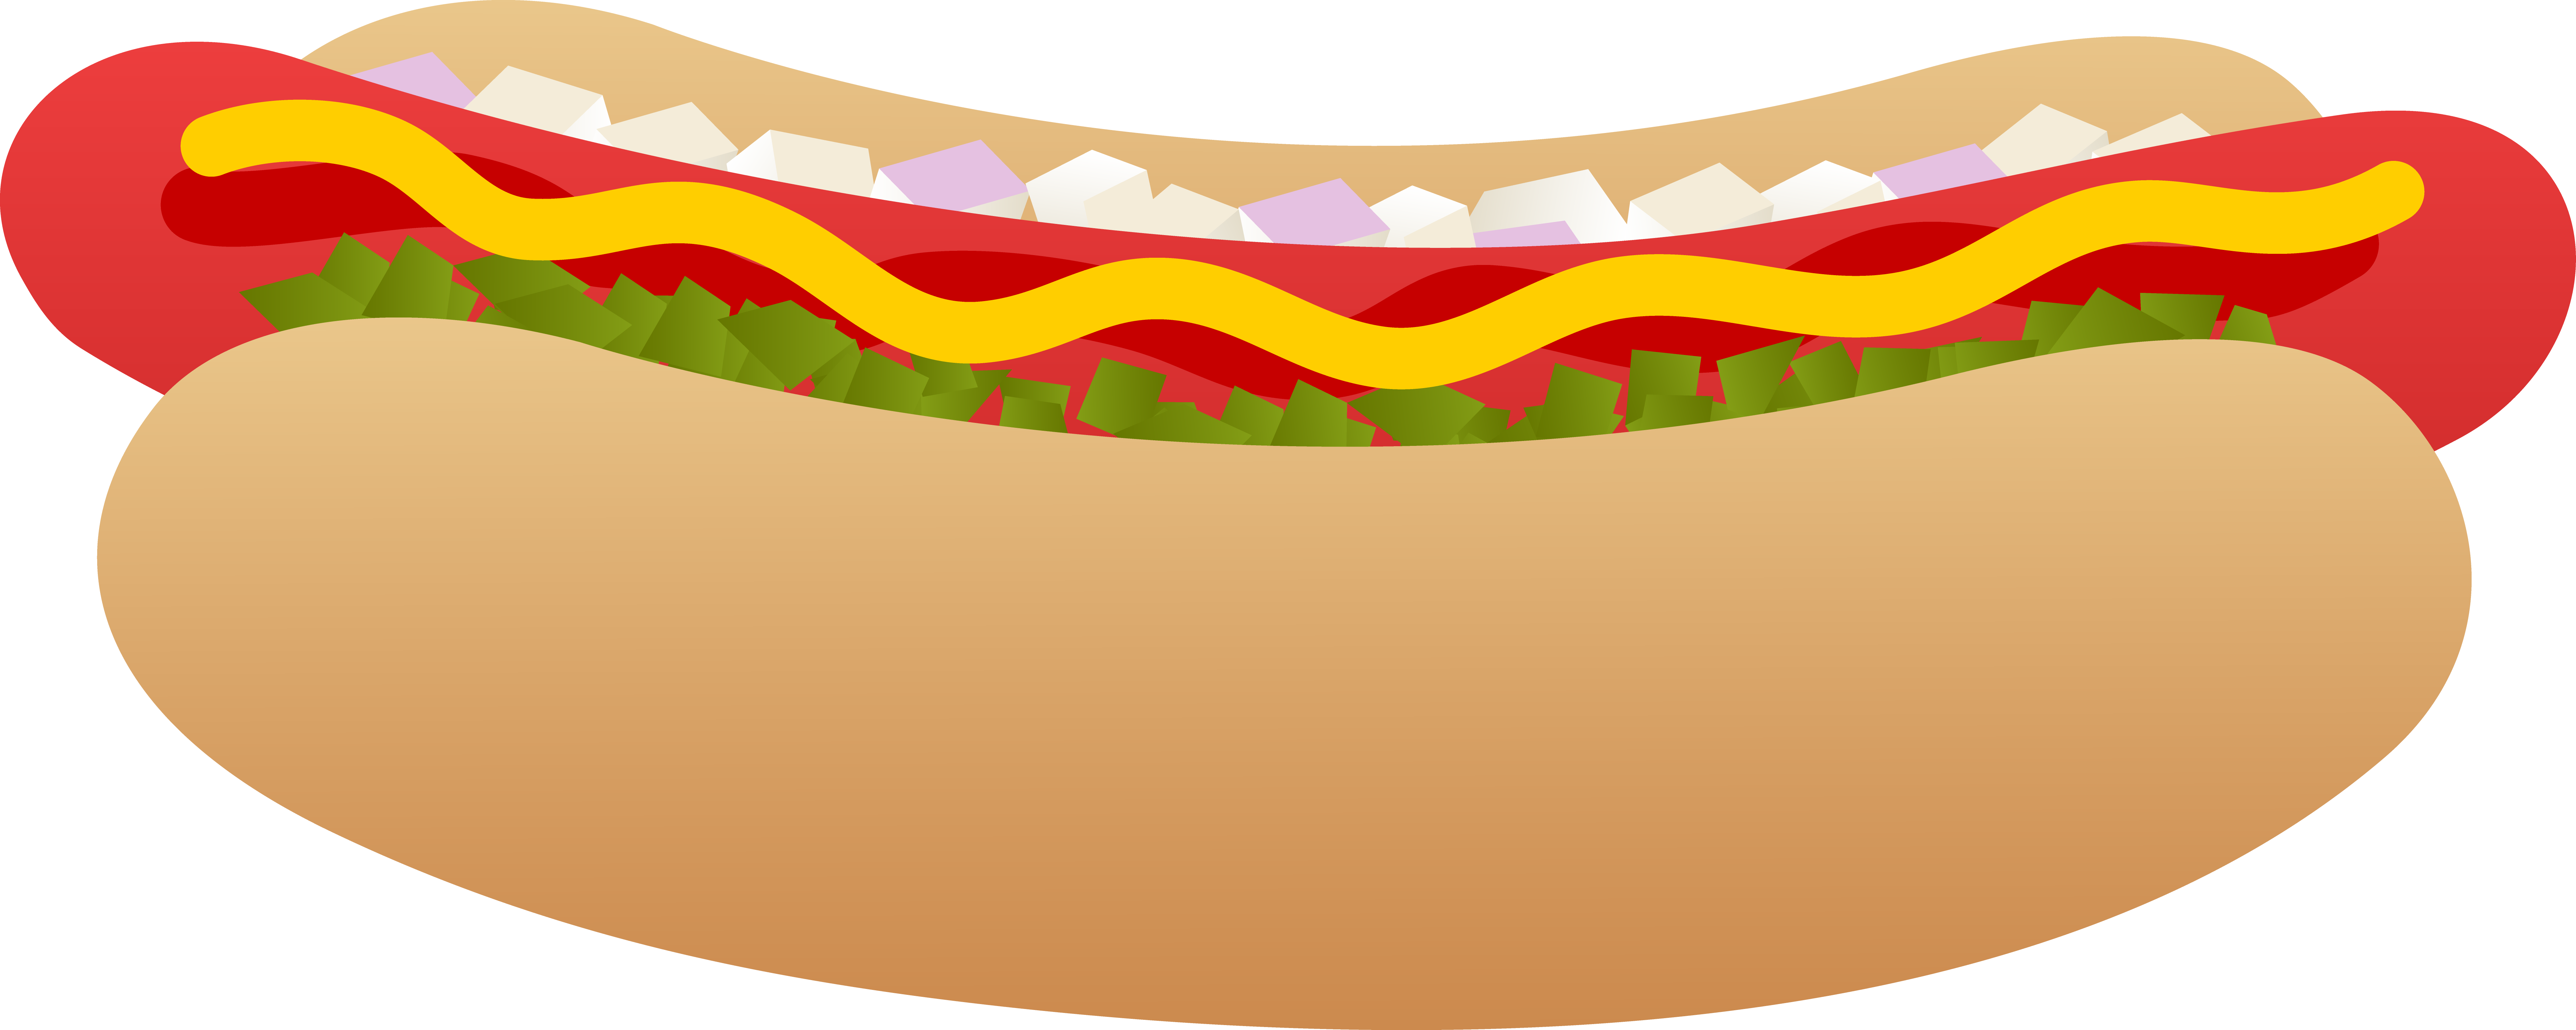 Cartoon hot dogs clipart